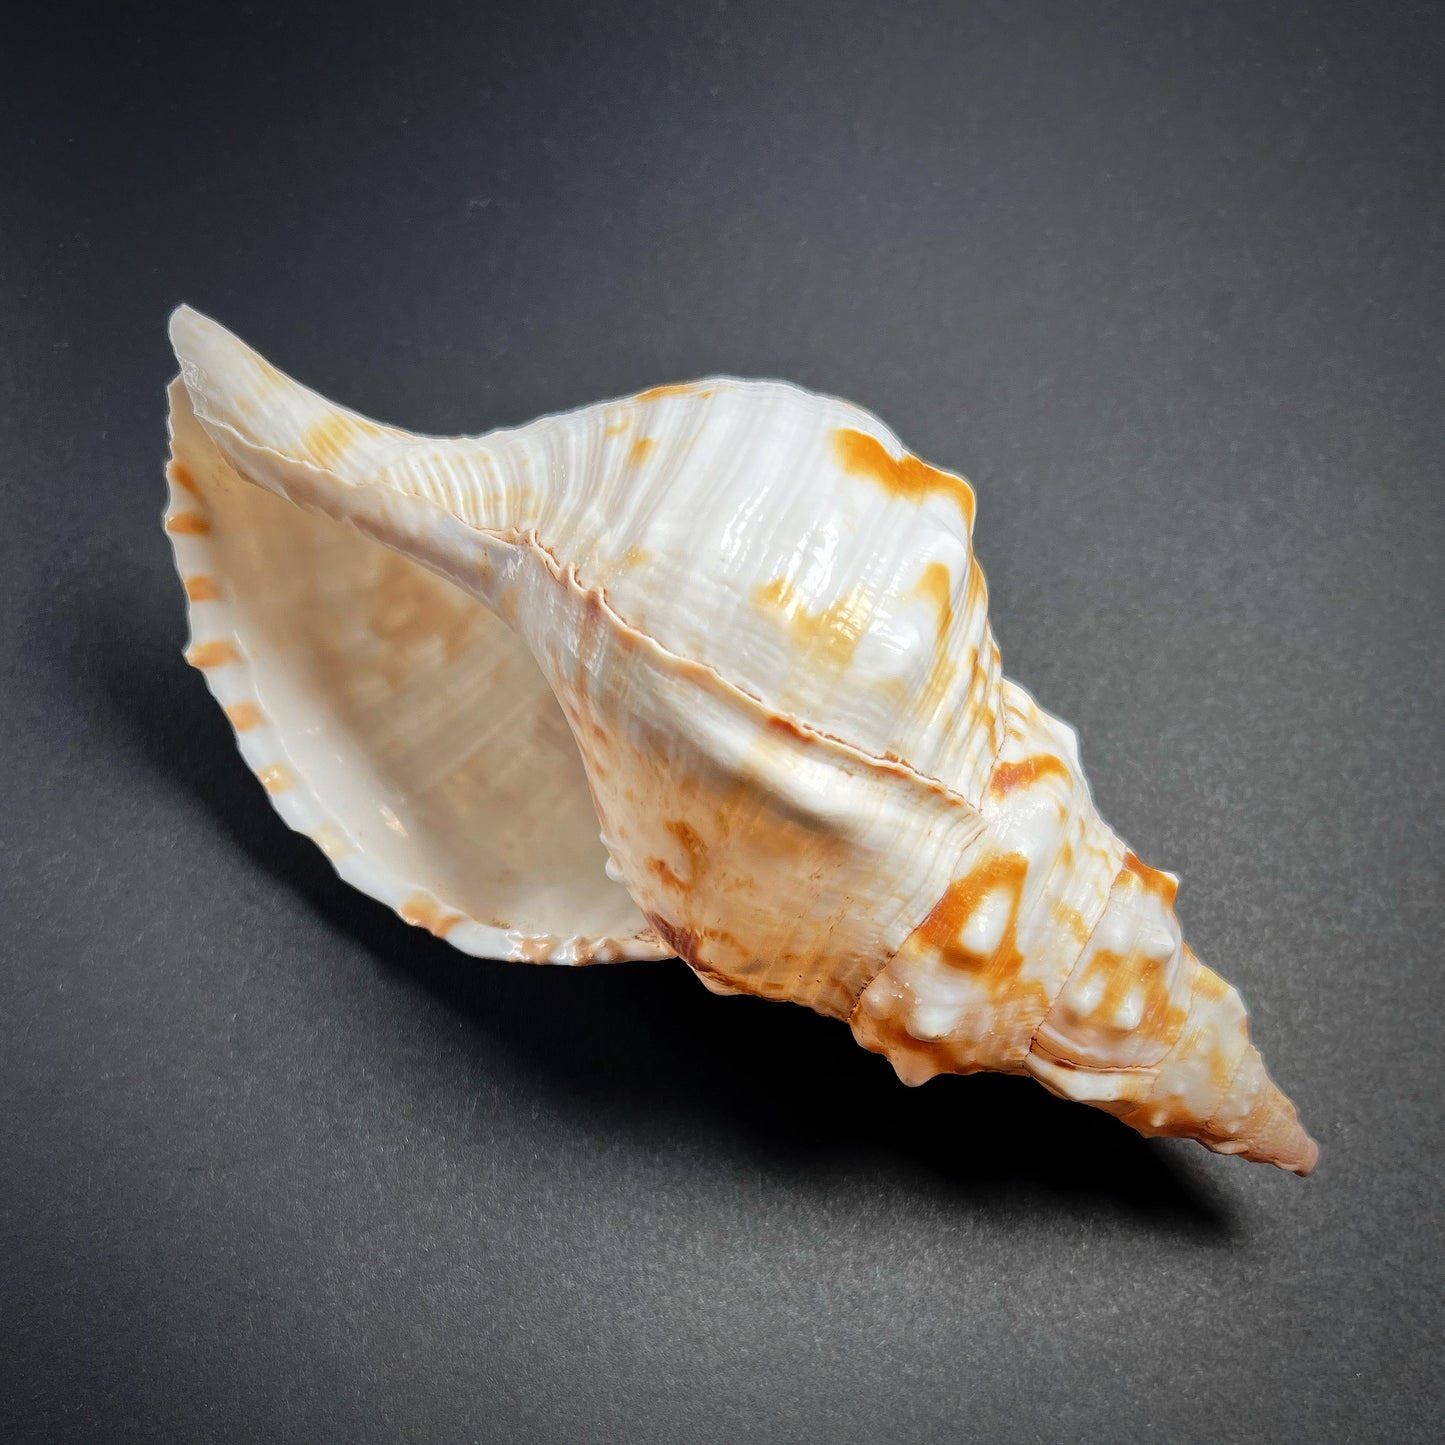 Conch shell - Charonia tritonis, M size 